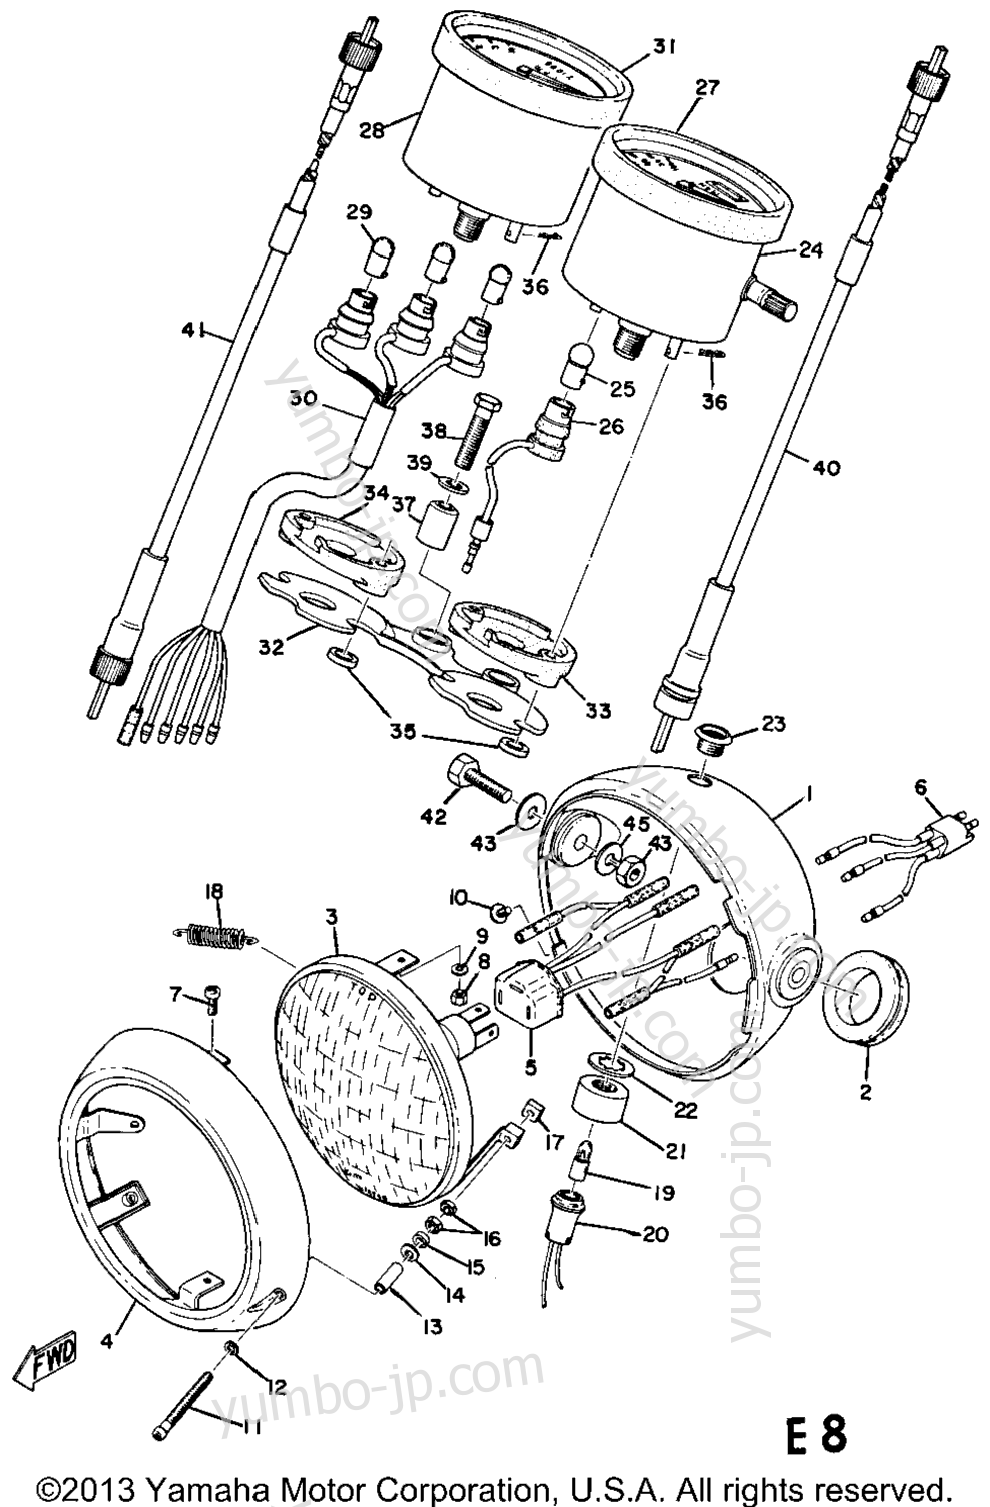 Head Lamp, Speedometer & Tachometer (At1c) for motorcycles YAMAHA AT1C 1971 year